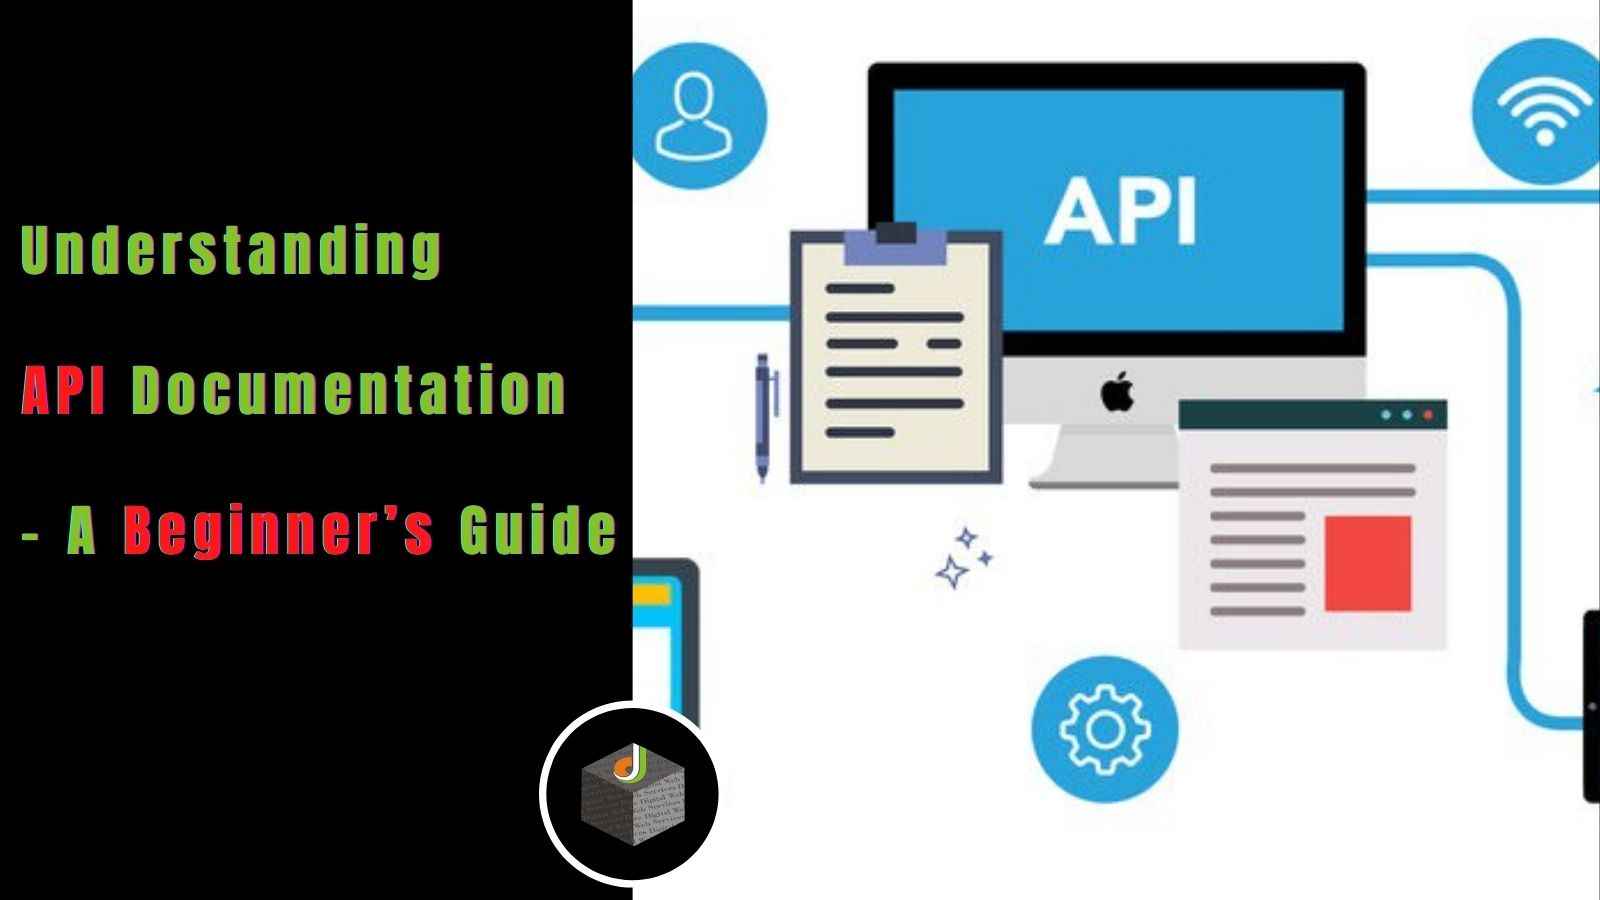 A Beginner’s Guide to Understanding API Documentation